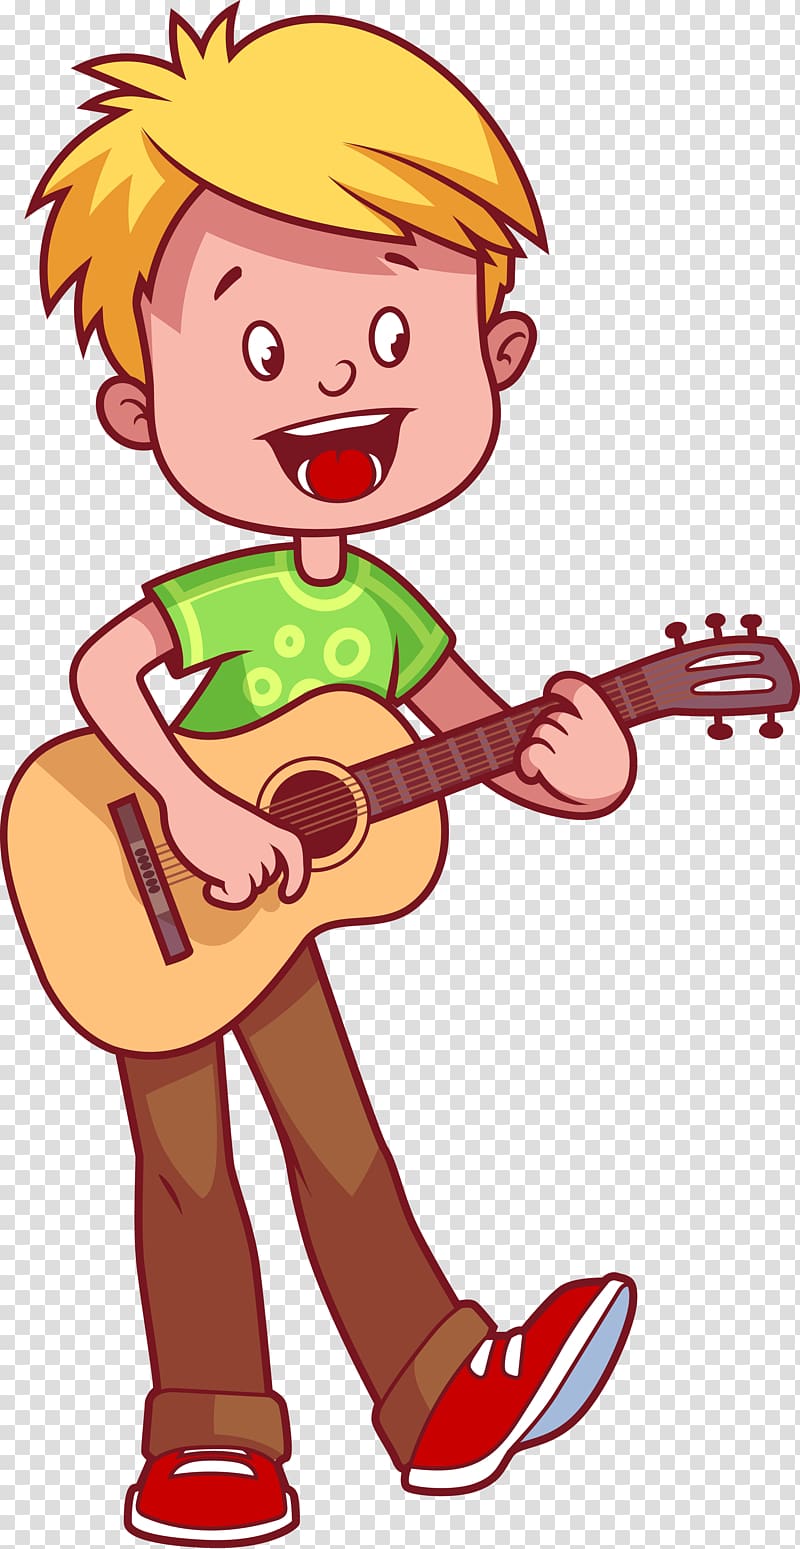 Acoustic Guitar Cartoon Images